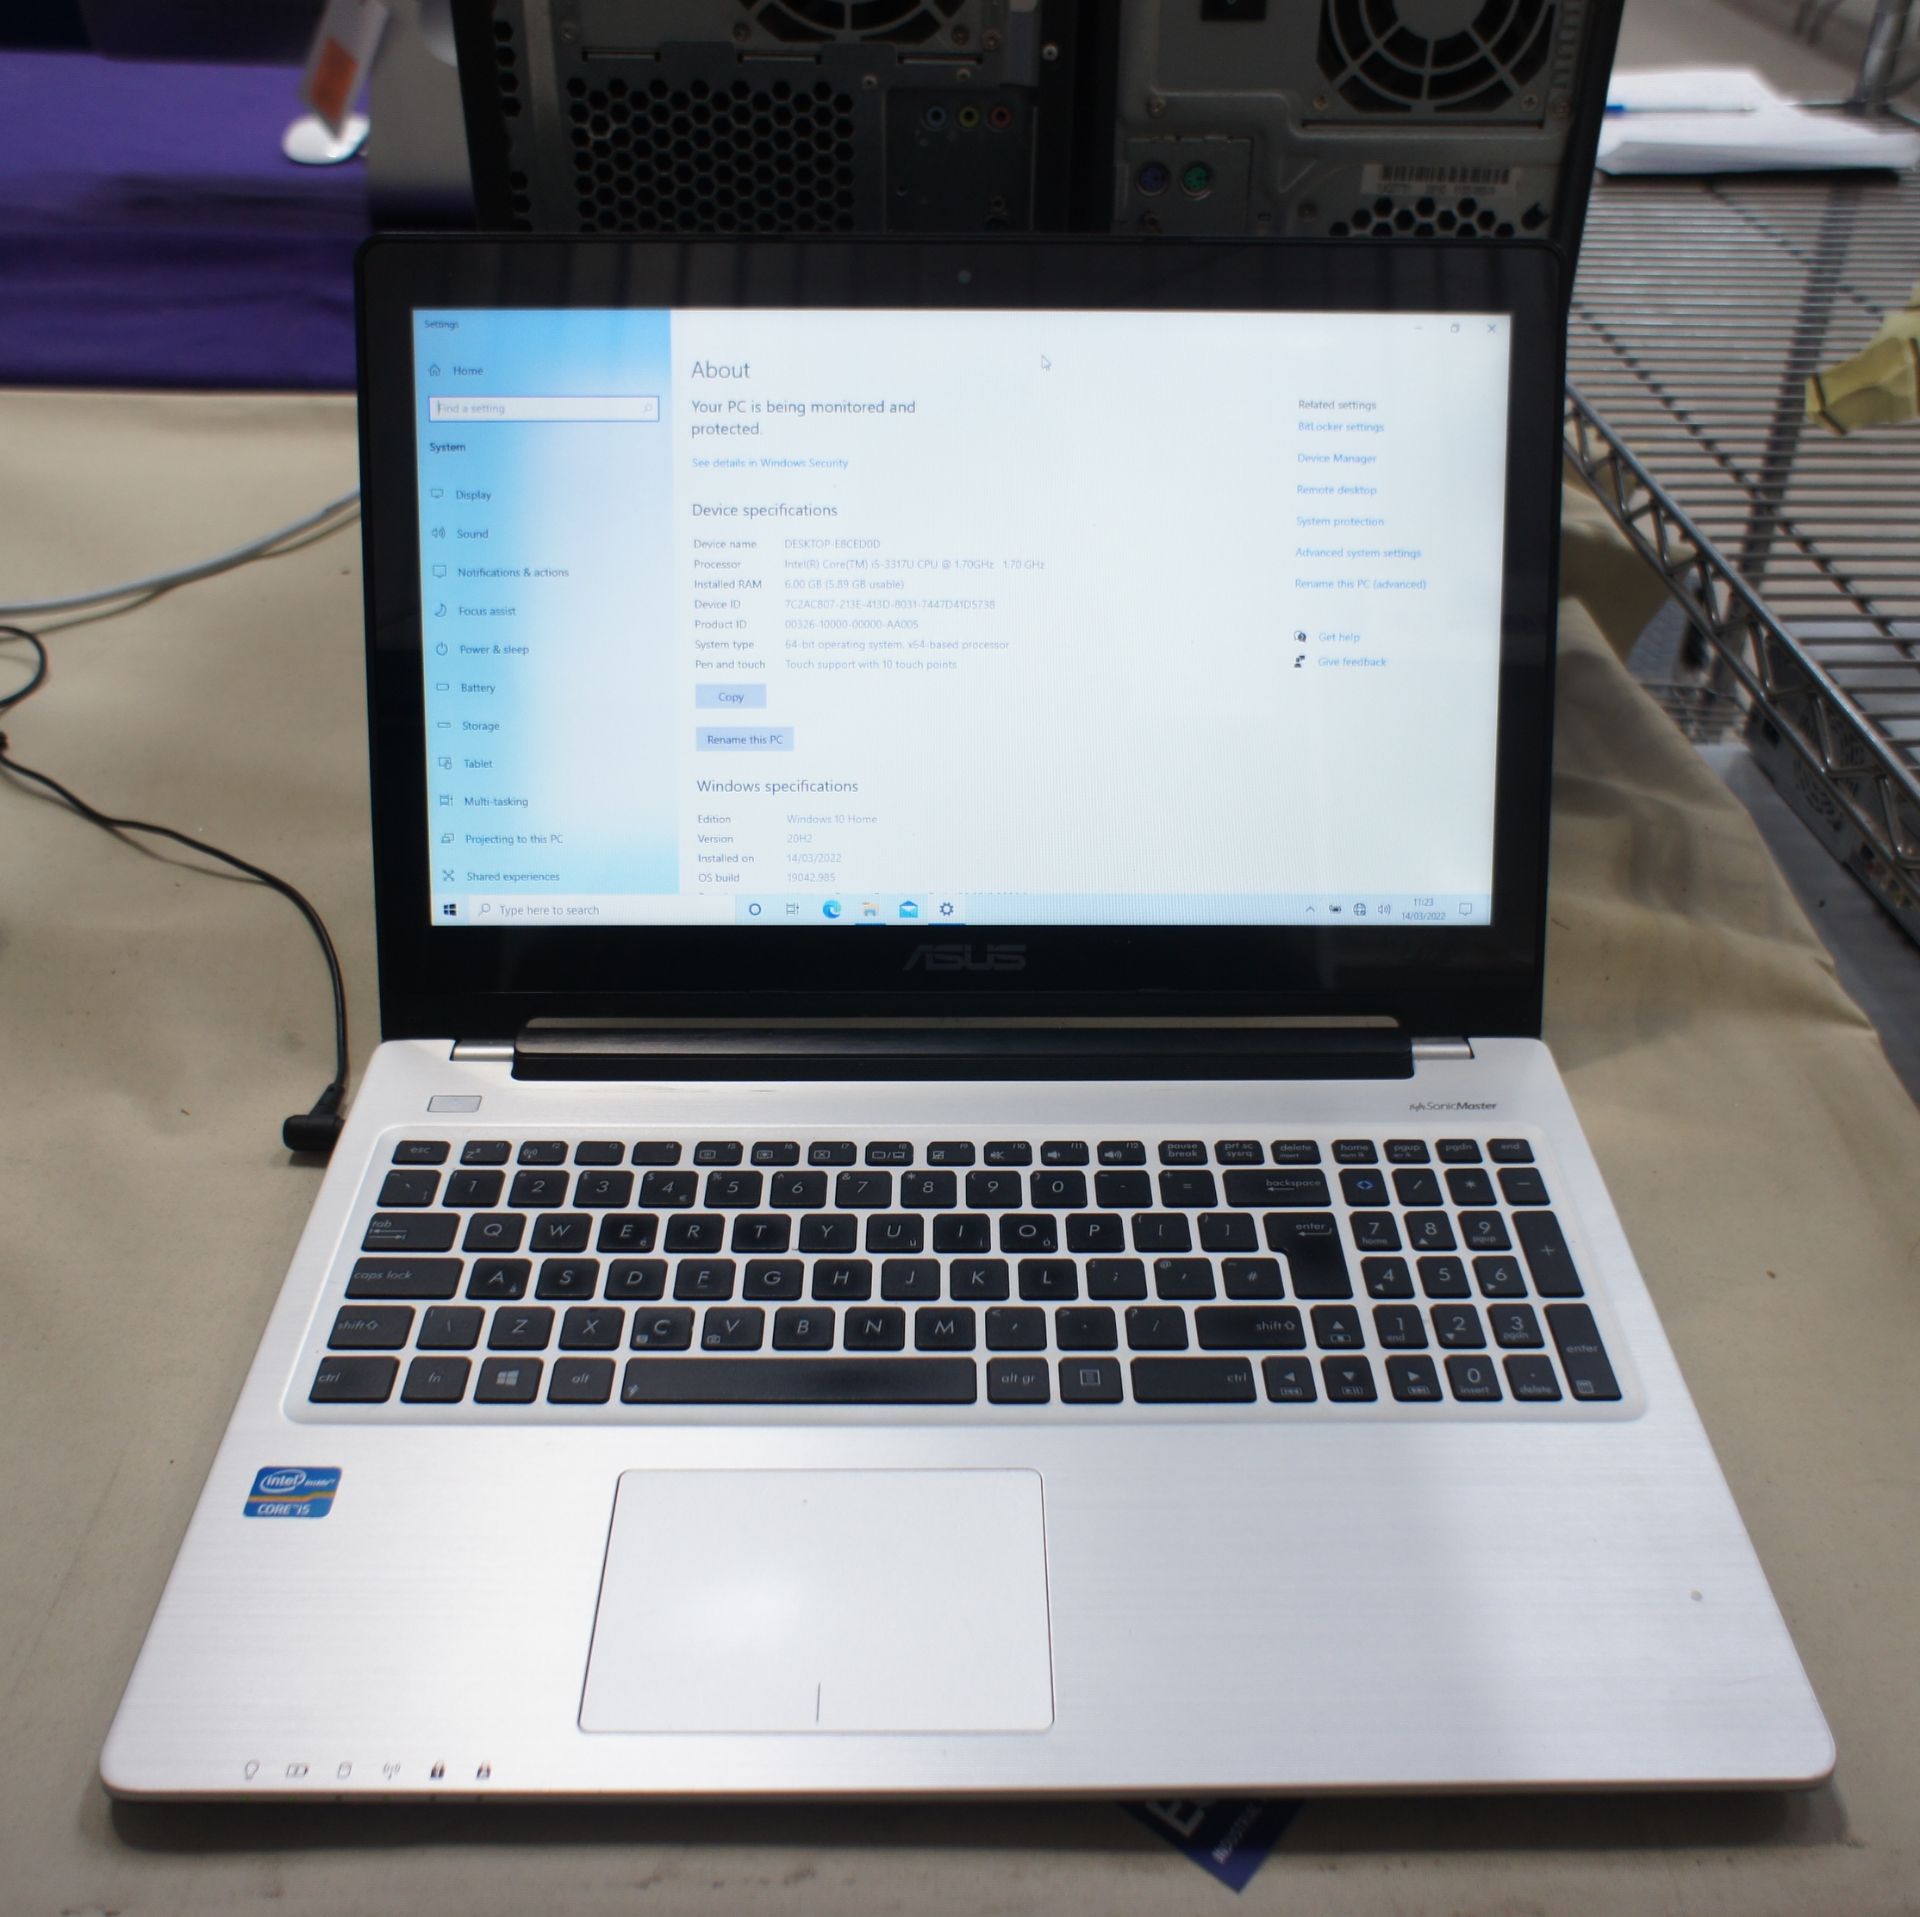 Acer Laptop Computer, Intel i5 Processor, 6GB Ram, 1TB Hard Drive, Windows 10 Home - Image 3 of 4